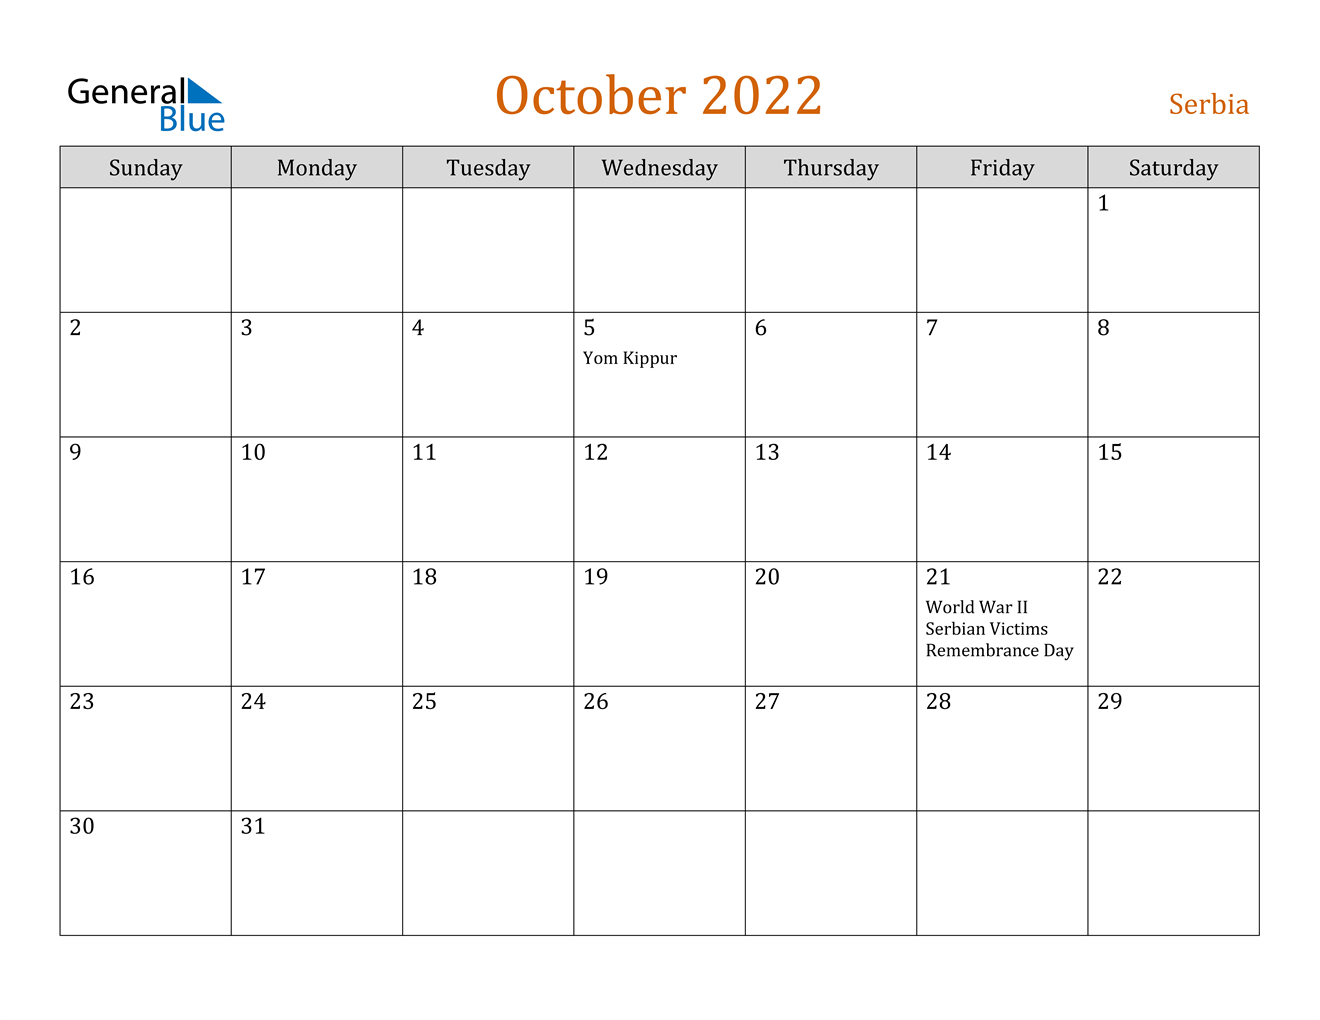 October 2022 Calendar - Serbia